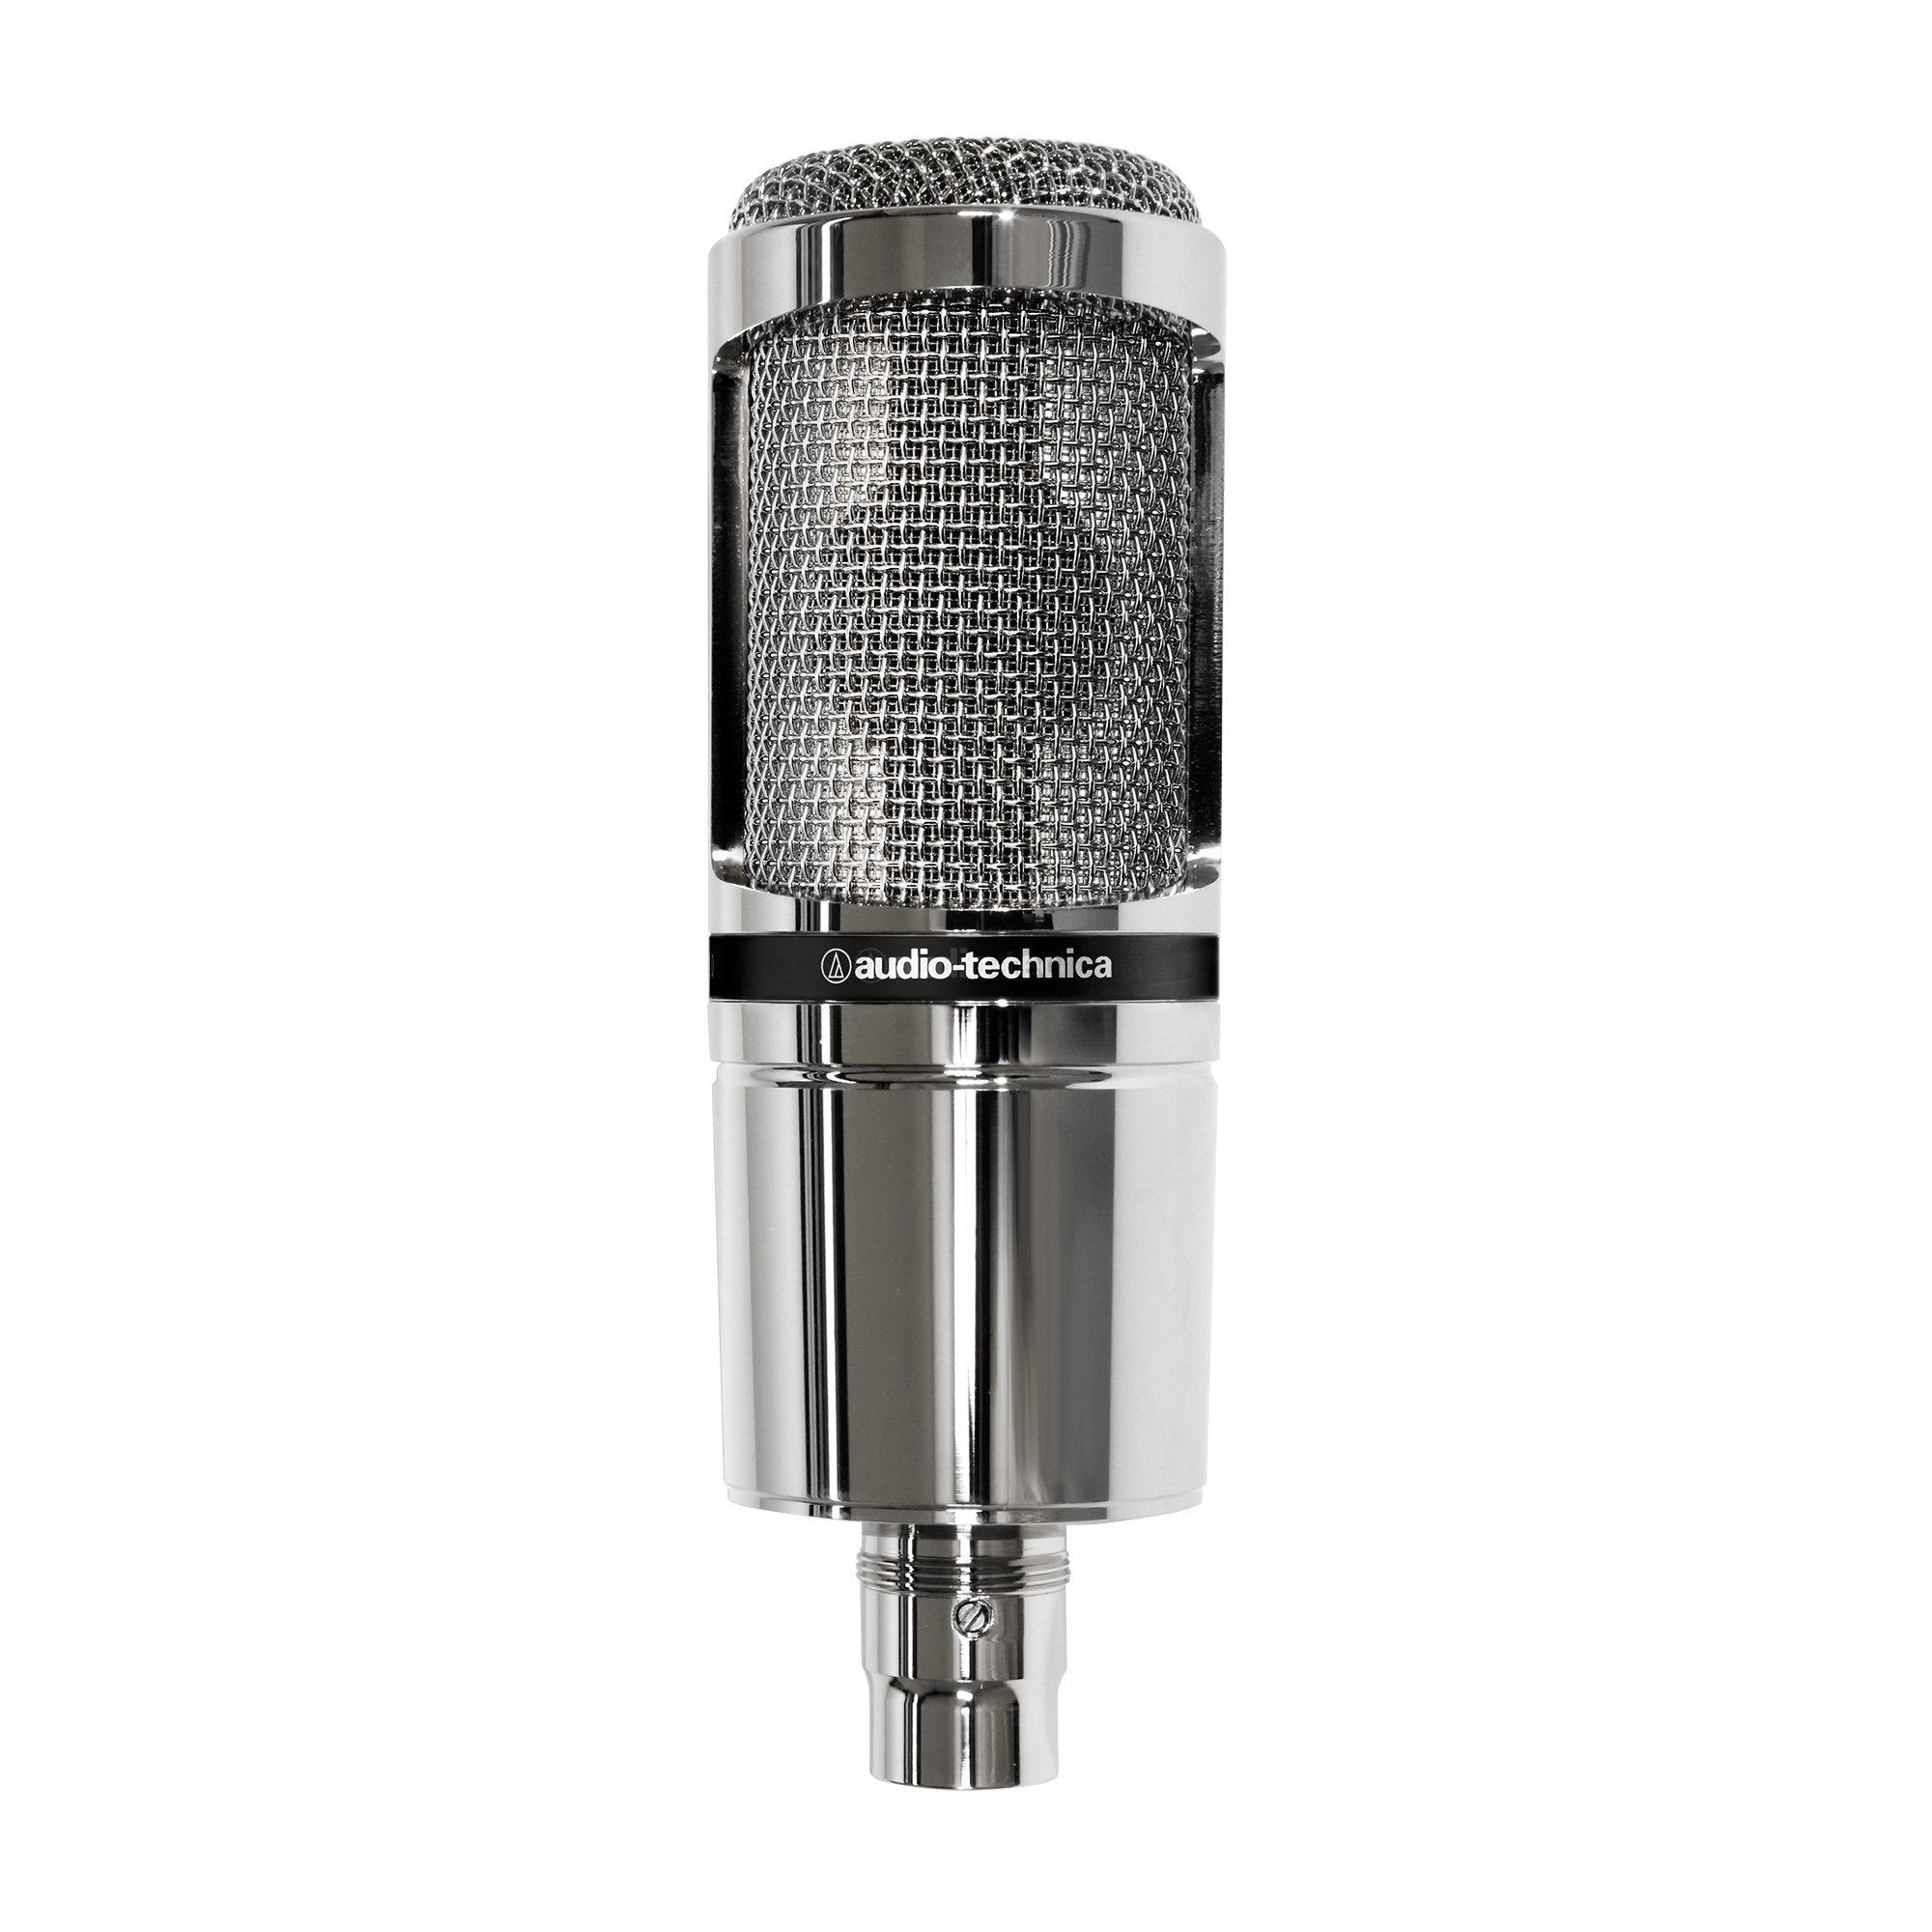 Audio-technical AT2020 Cardioid Condenser Microphone blog.knak.jp